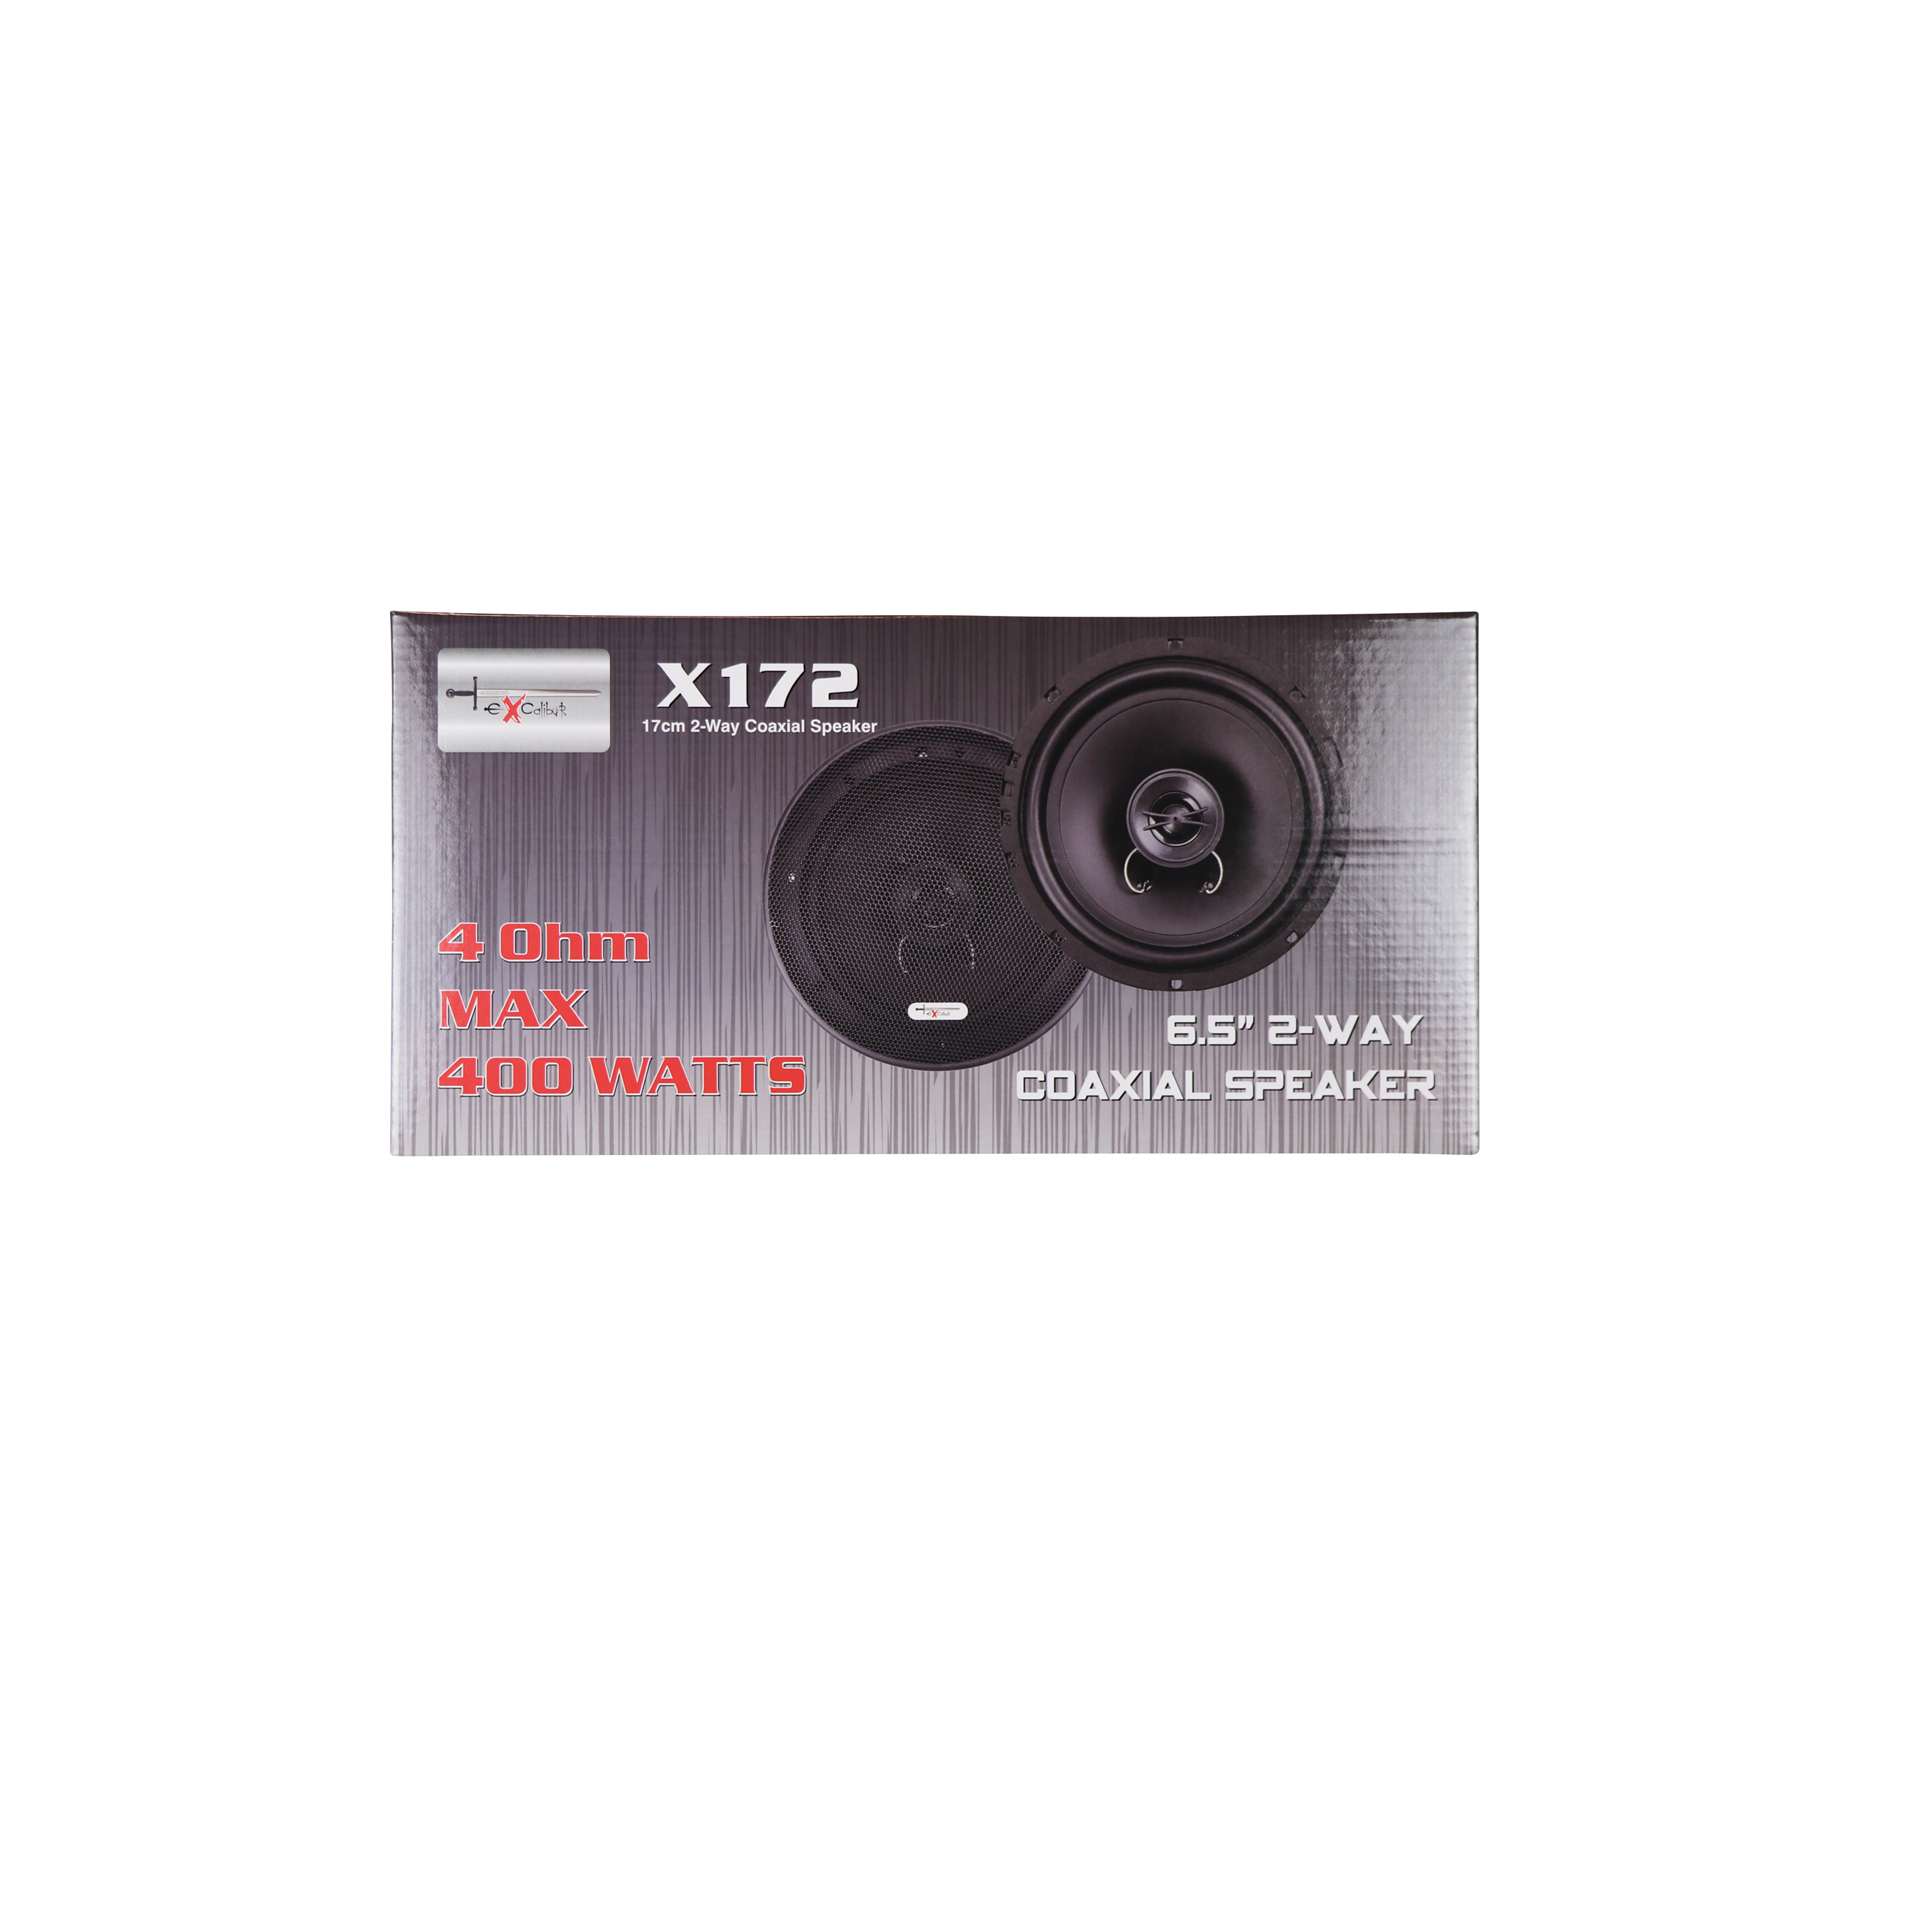 Excalibur Speakerset X172 (0810544)